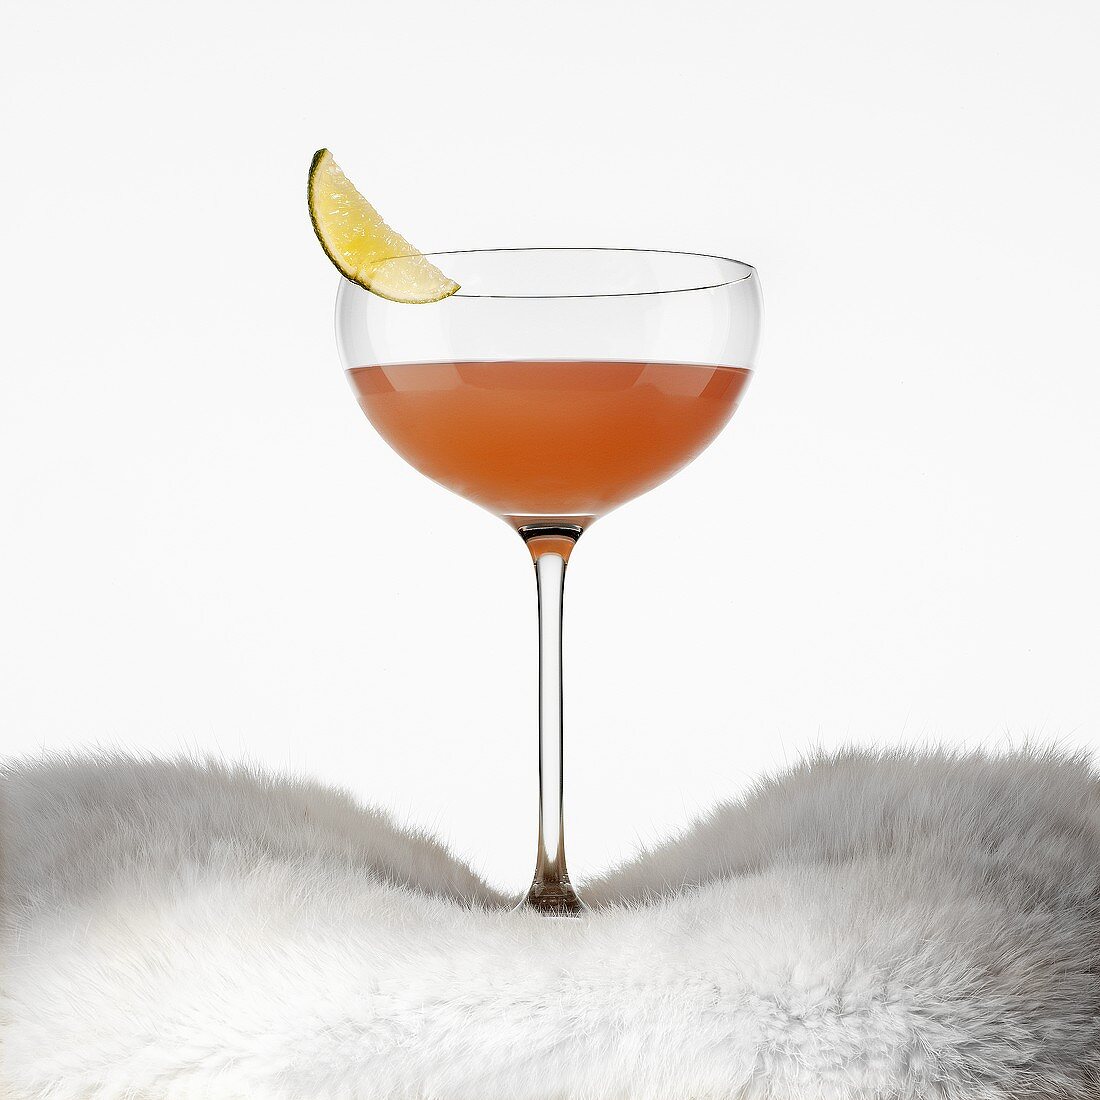 Bacardi cocktail